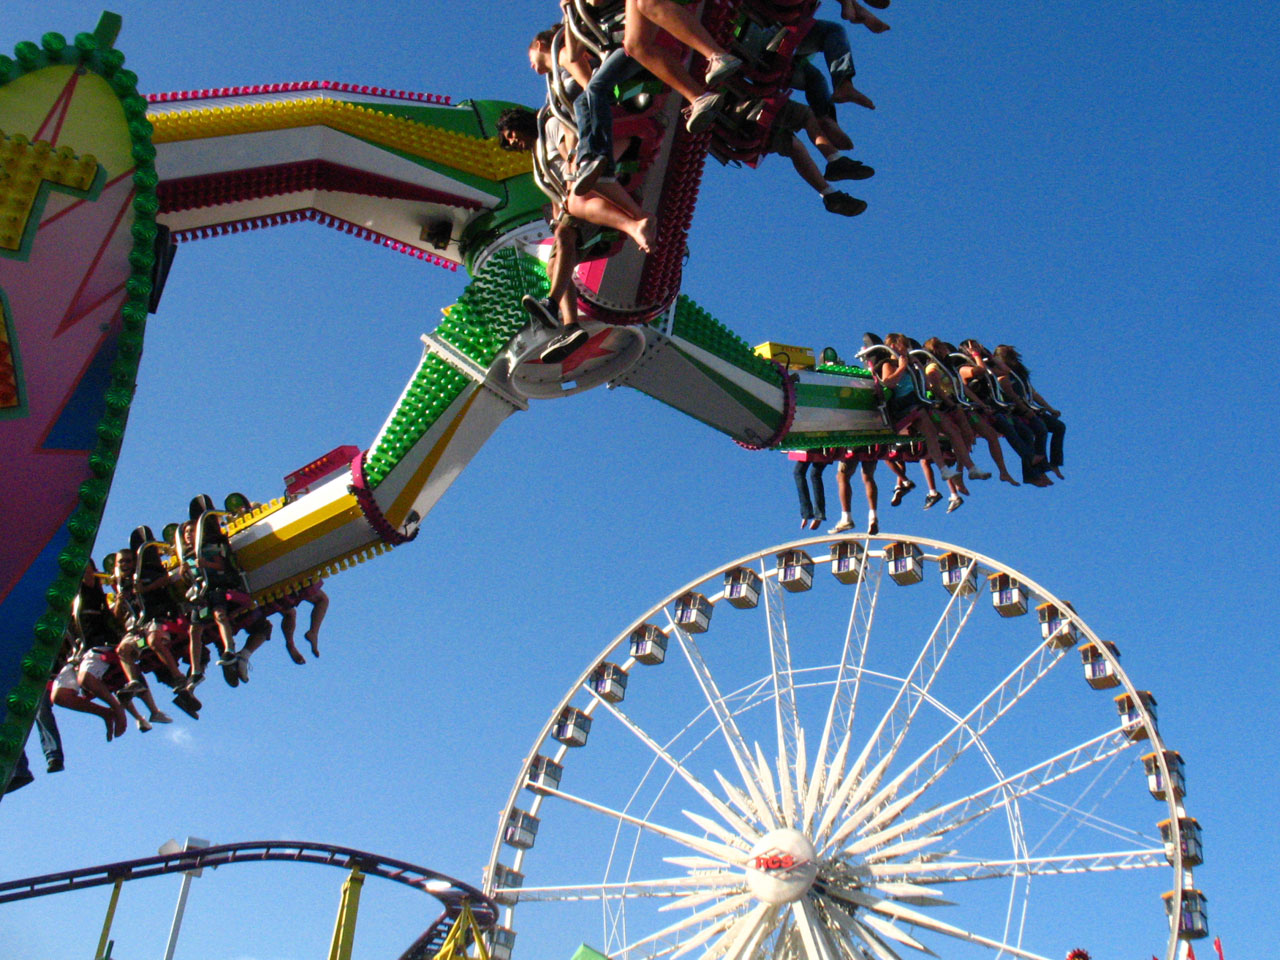 Amusement park rides at the Orange County Fair in Costa Mesa, California